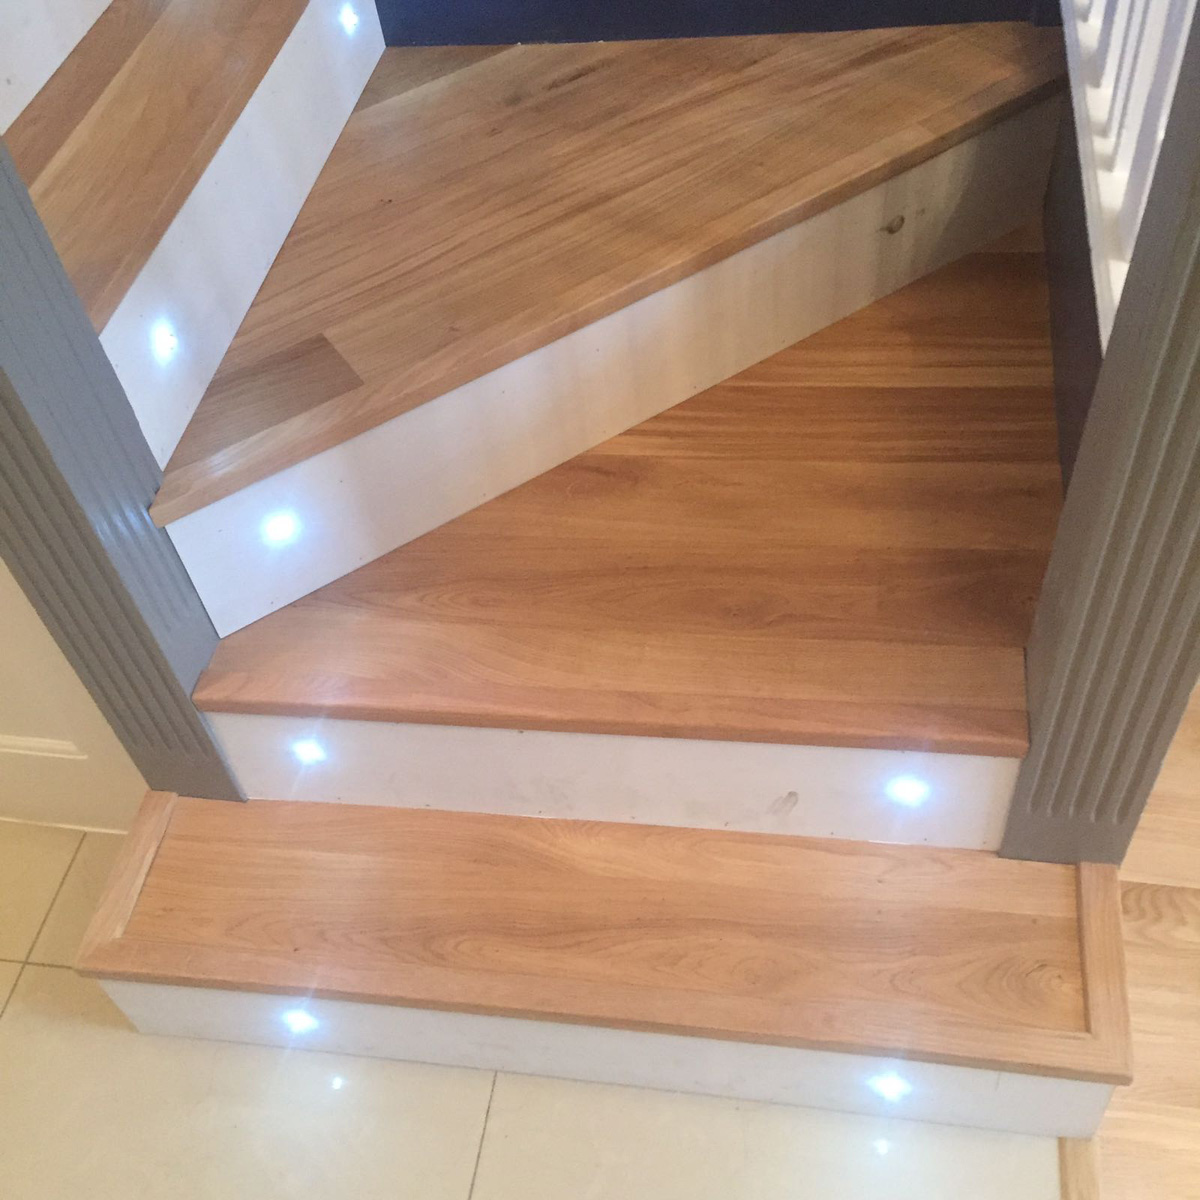 Stairway remodelling: carpet removal, new oak flooring installation, led lighting installation